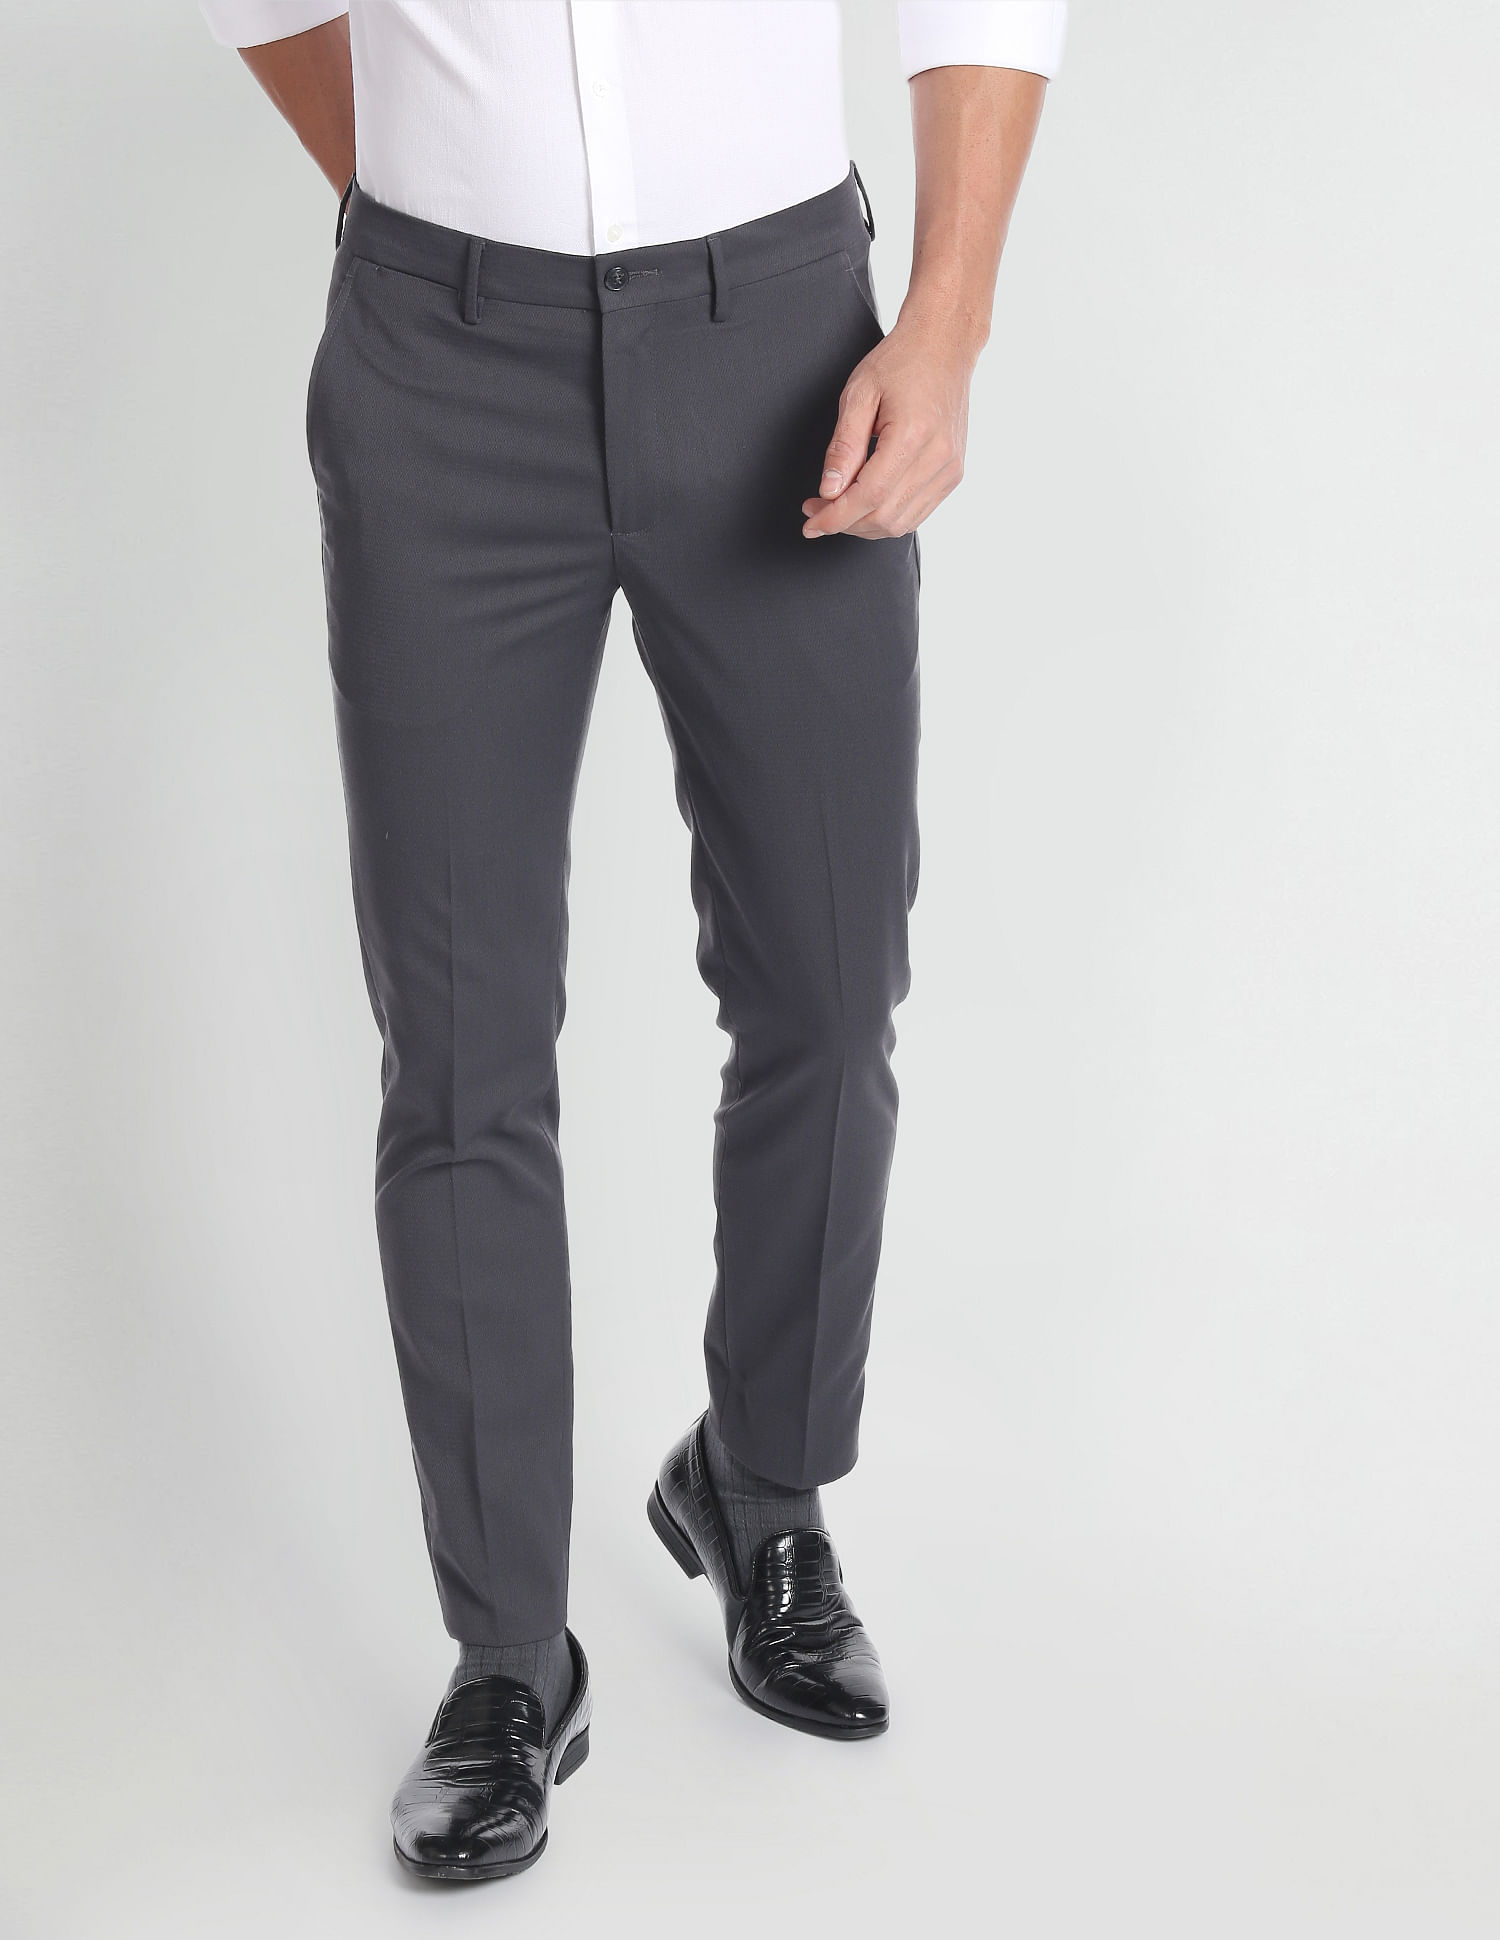 Buy Plaid&Plain Men's Slim Fit Dress Pants Tapered Skinny Dress Pants  7603Black(New) 30X28 at Amazon.in